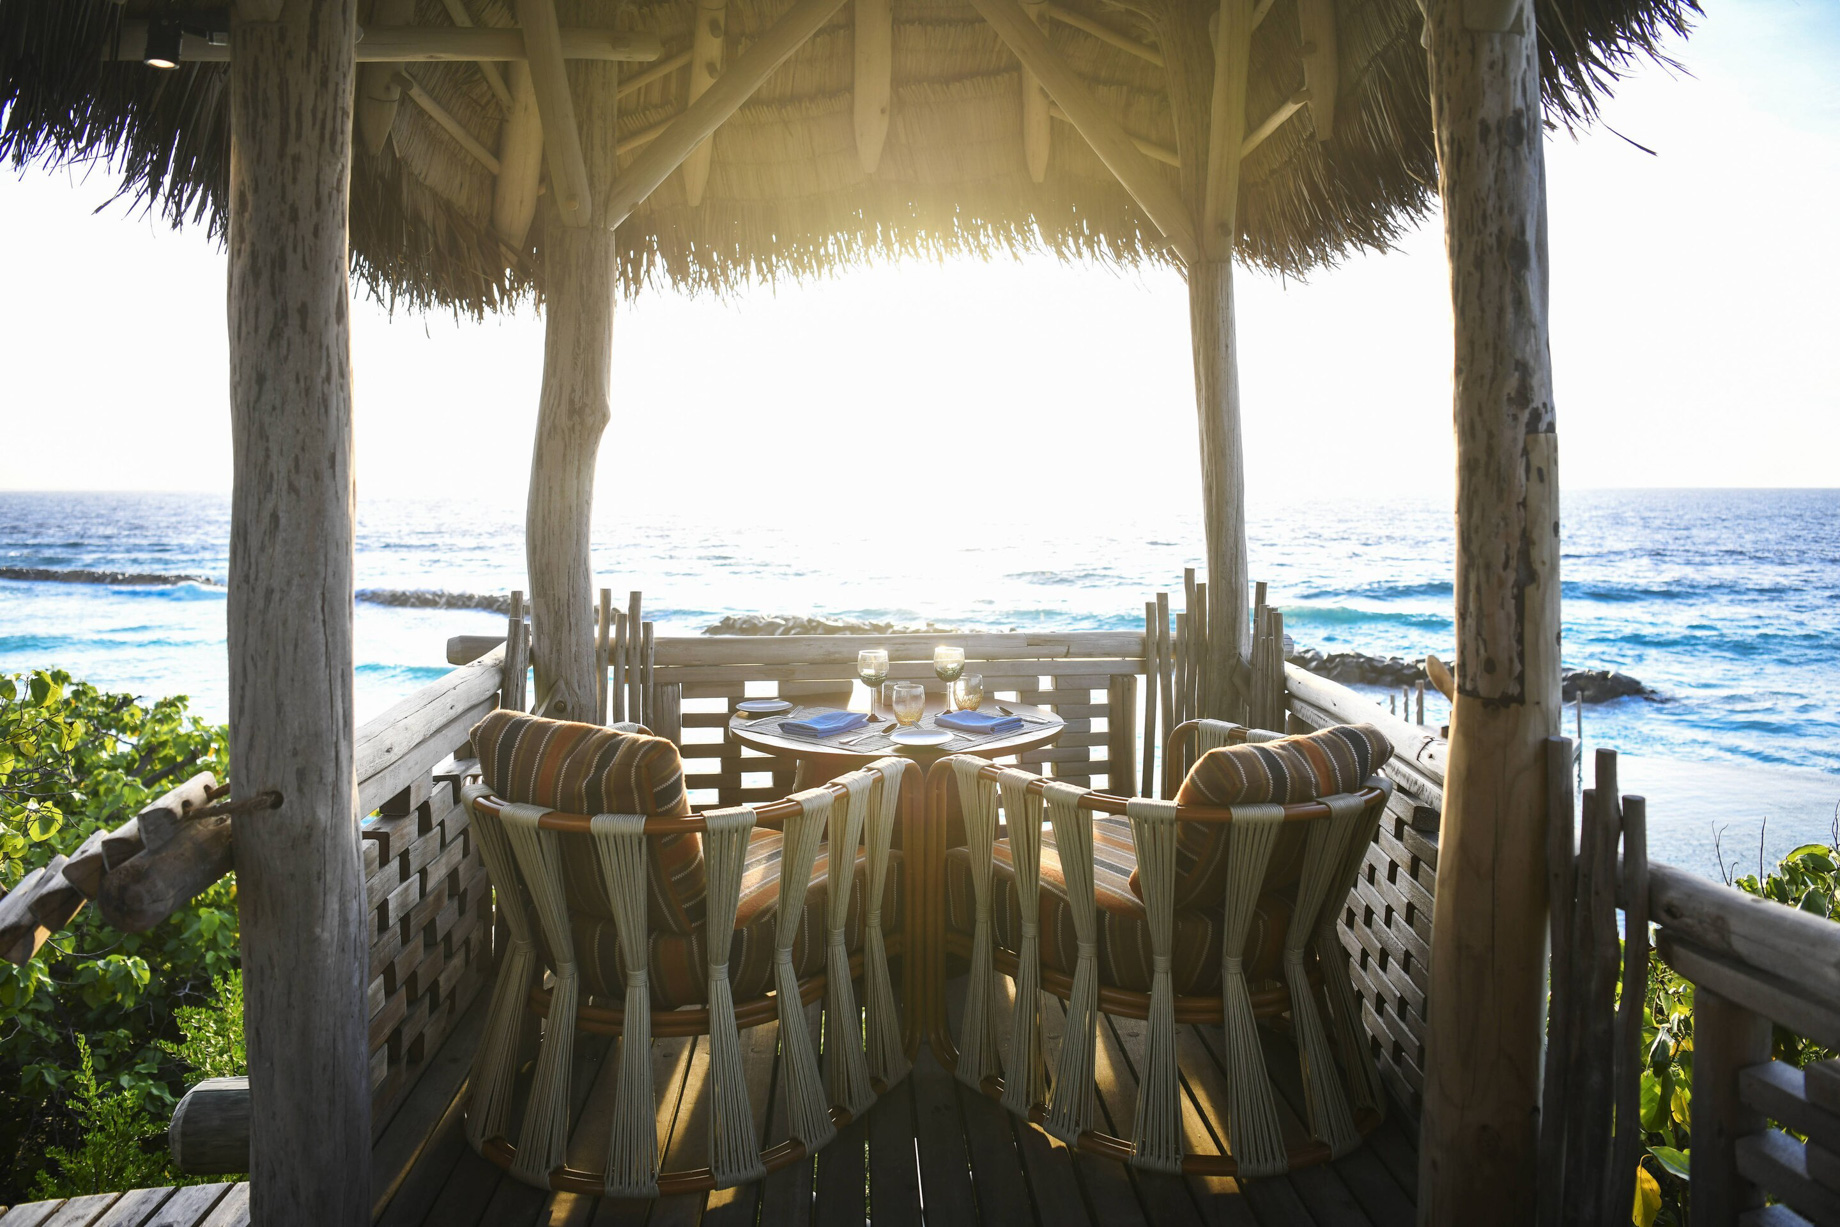 JW Marriott Maldives Resort & Spa – Shaviyani Atoll, Maldives – Kaashi Private Ocean View Seating